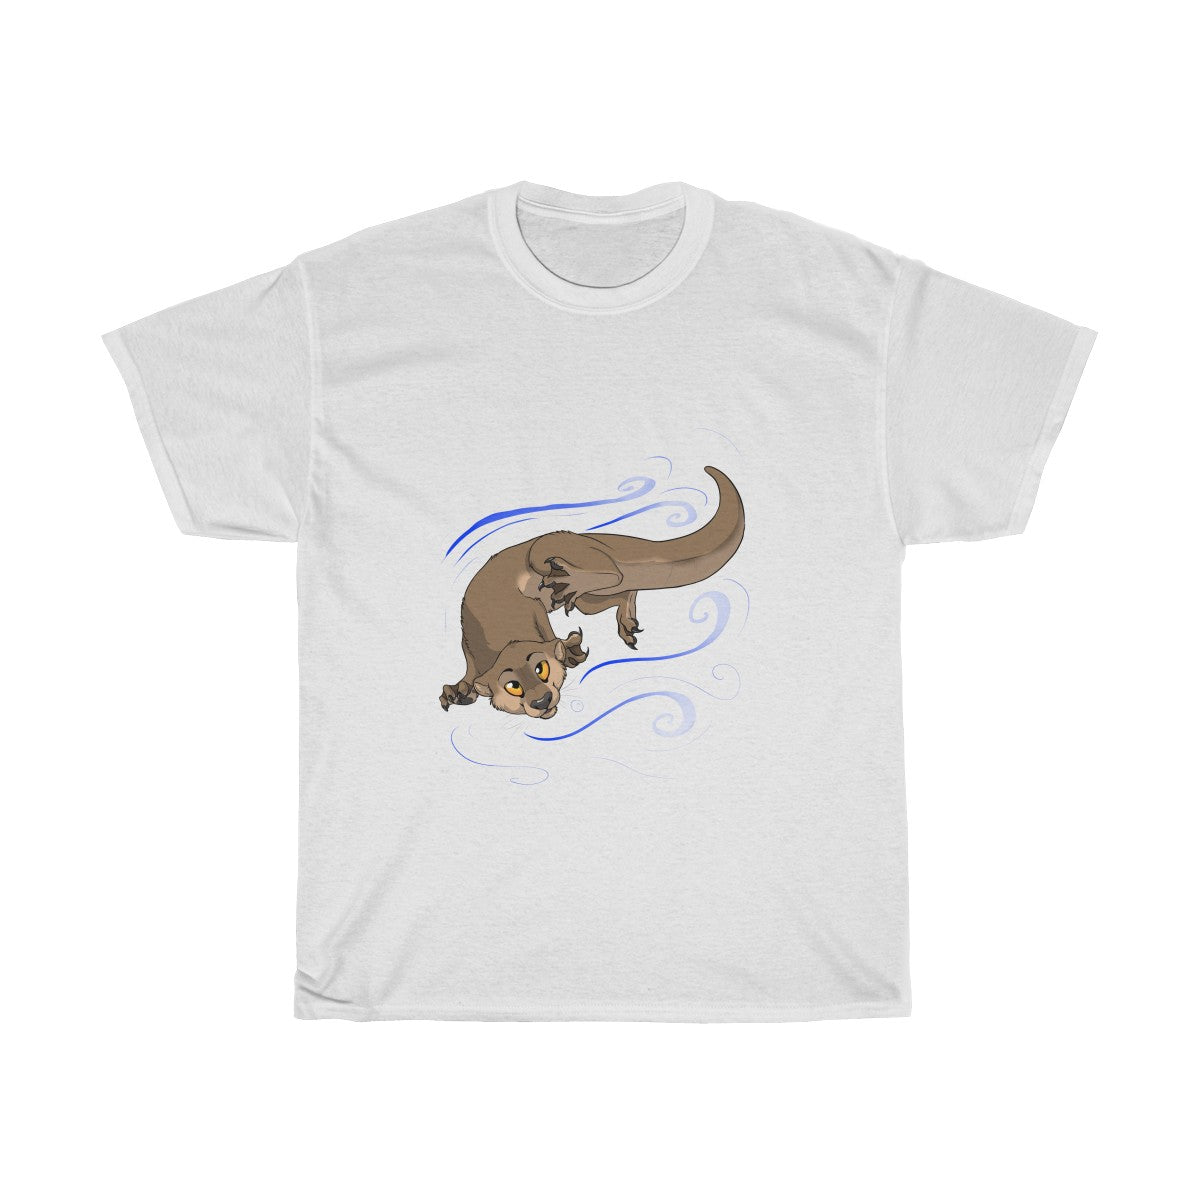 Otter - T-Shirt T-Shirt Dire Creatures White S 